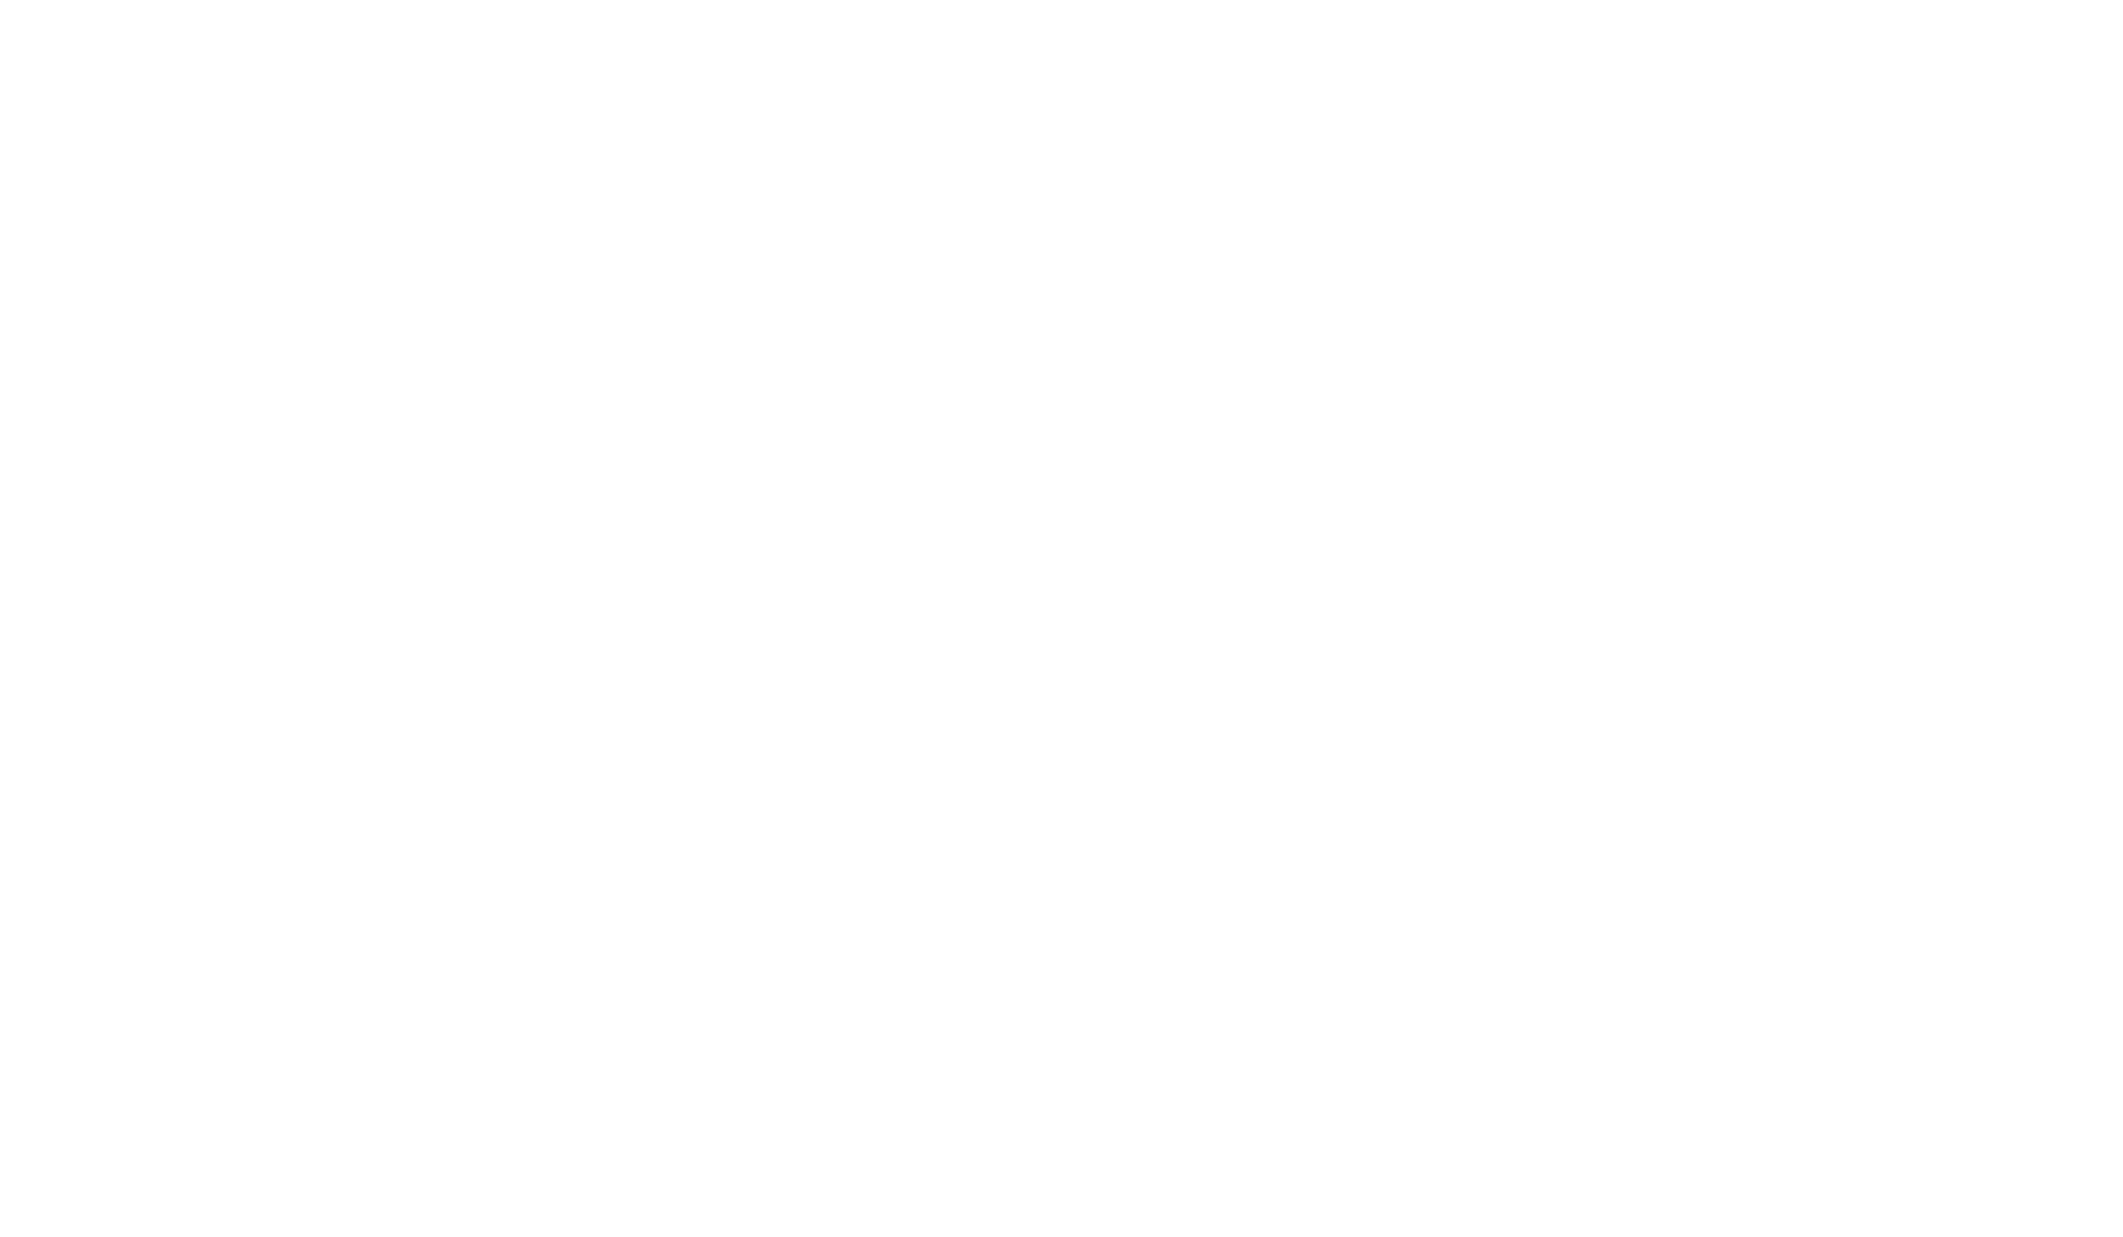 Lorry image